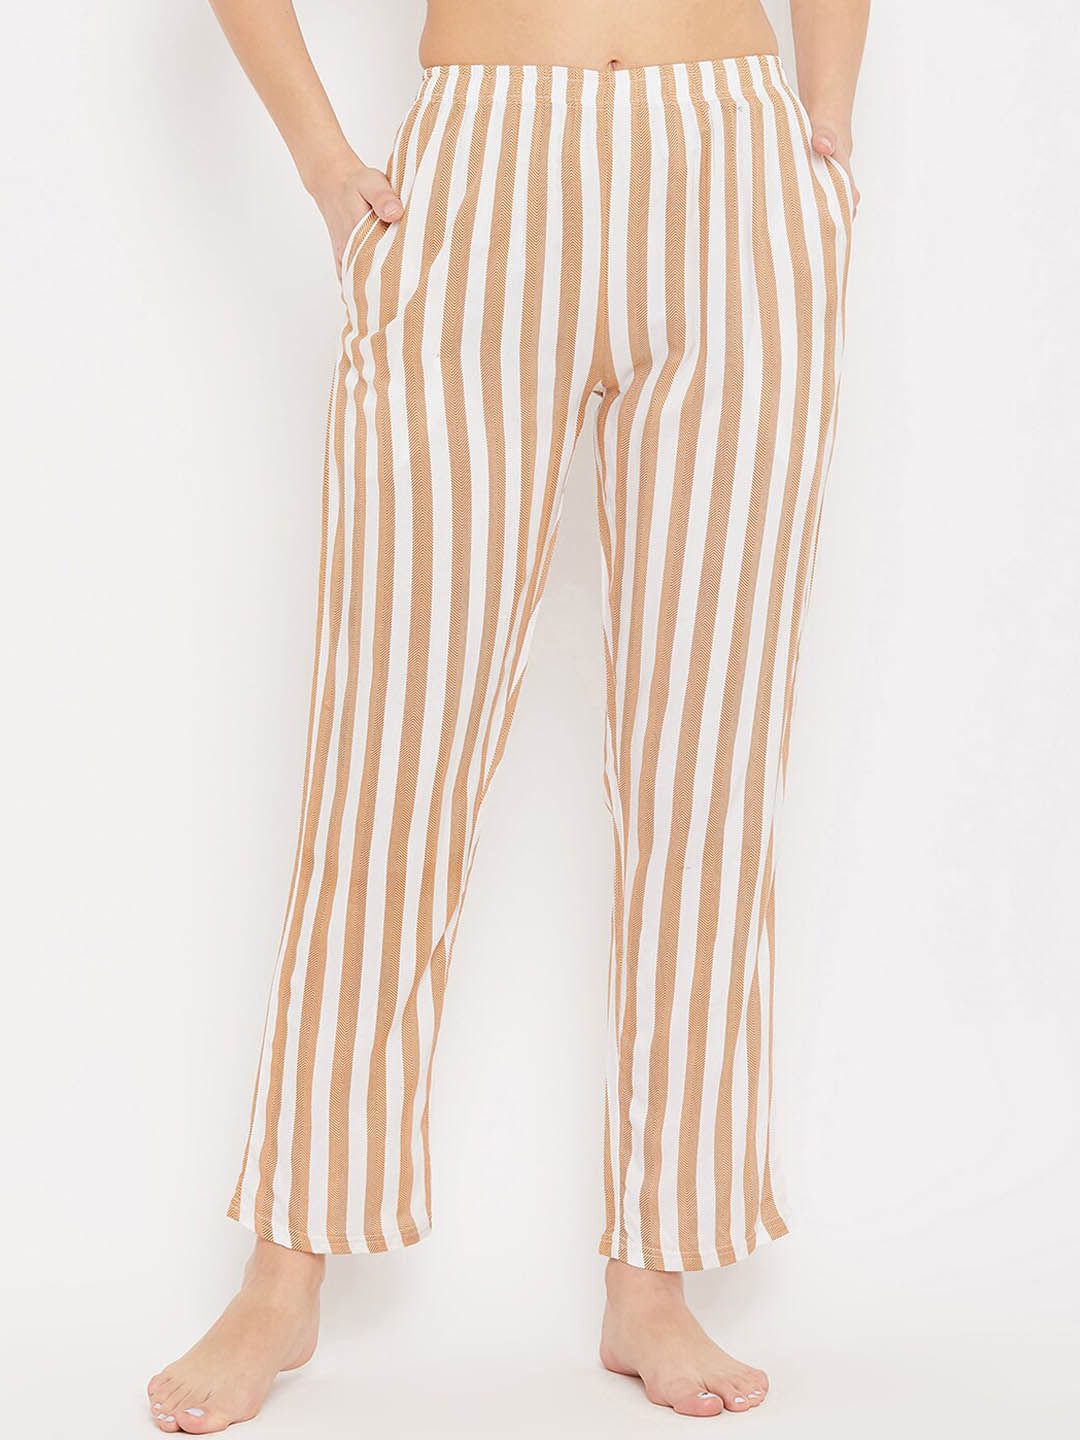 Clovia Women Beige & White Striped Lounge Pants Price in India